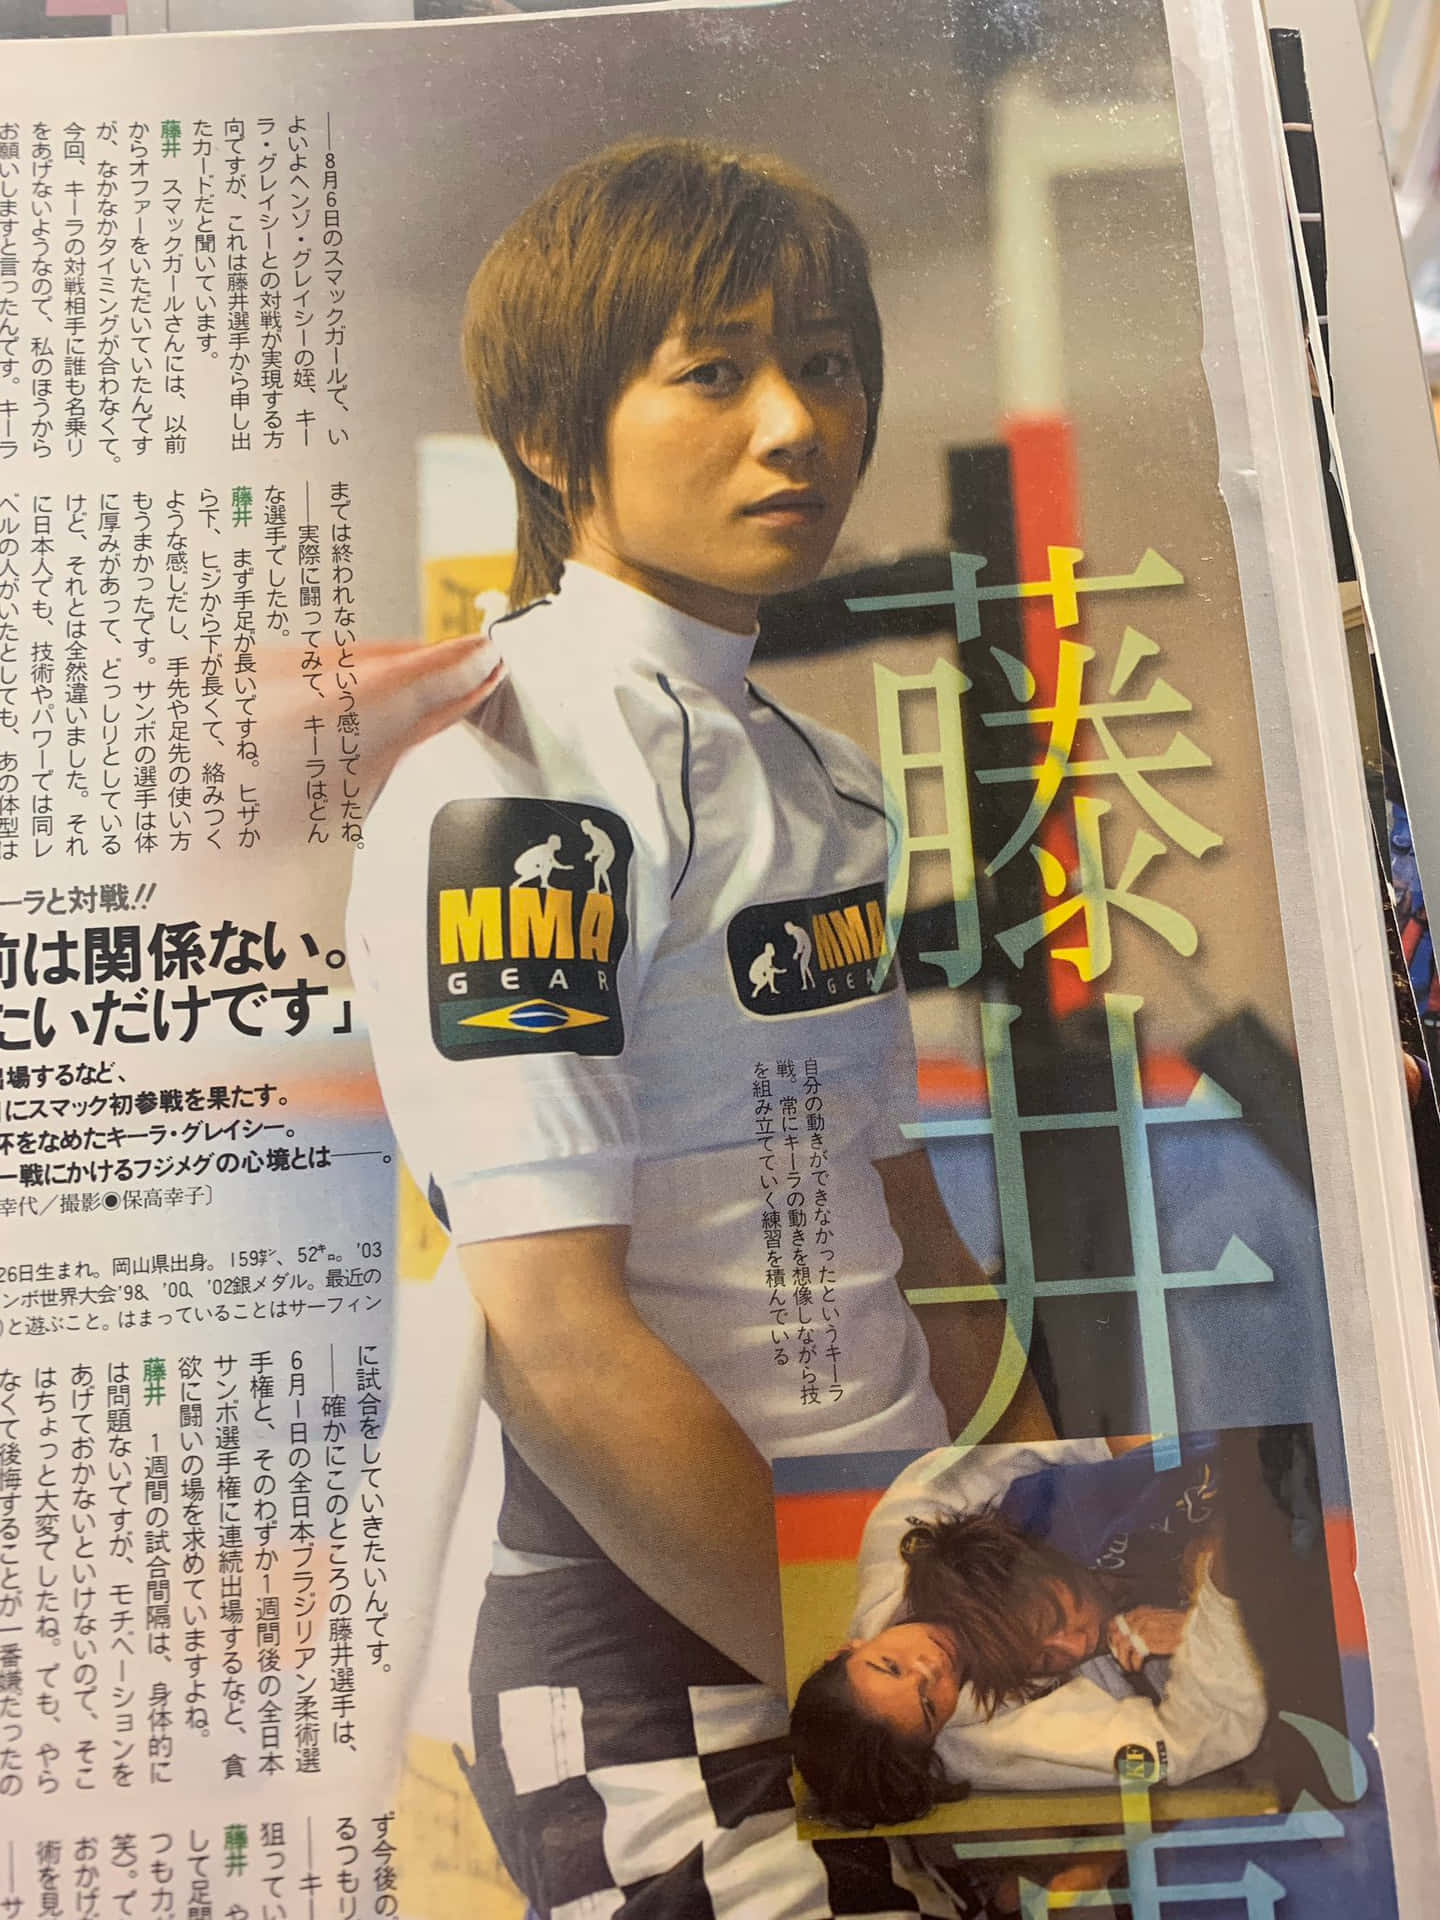 Megumi Fujii - The Ultimate Female MMA Fighter Wallpaper